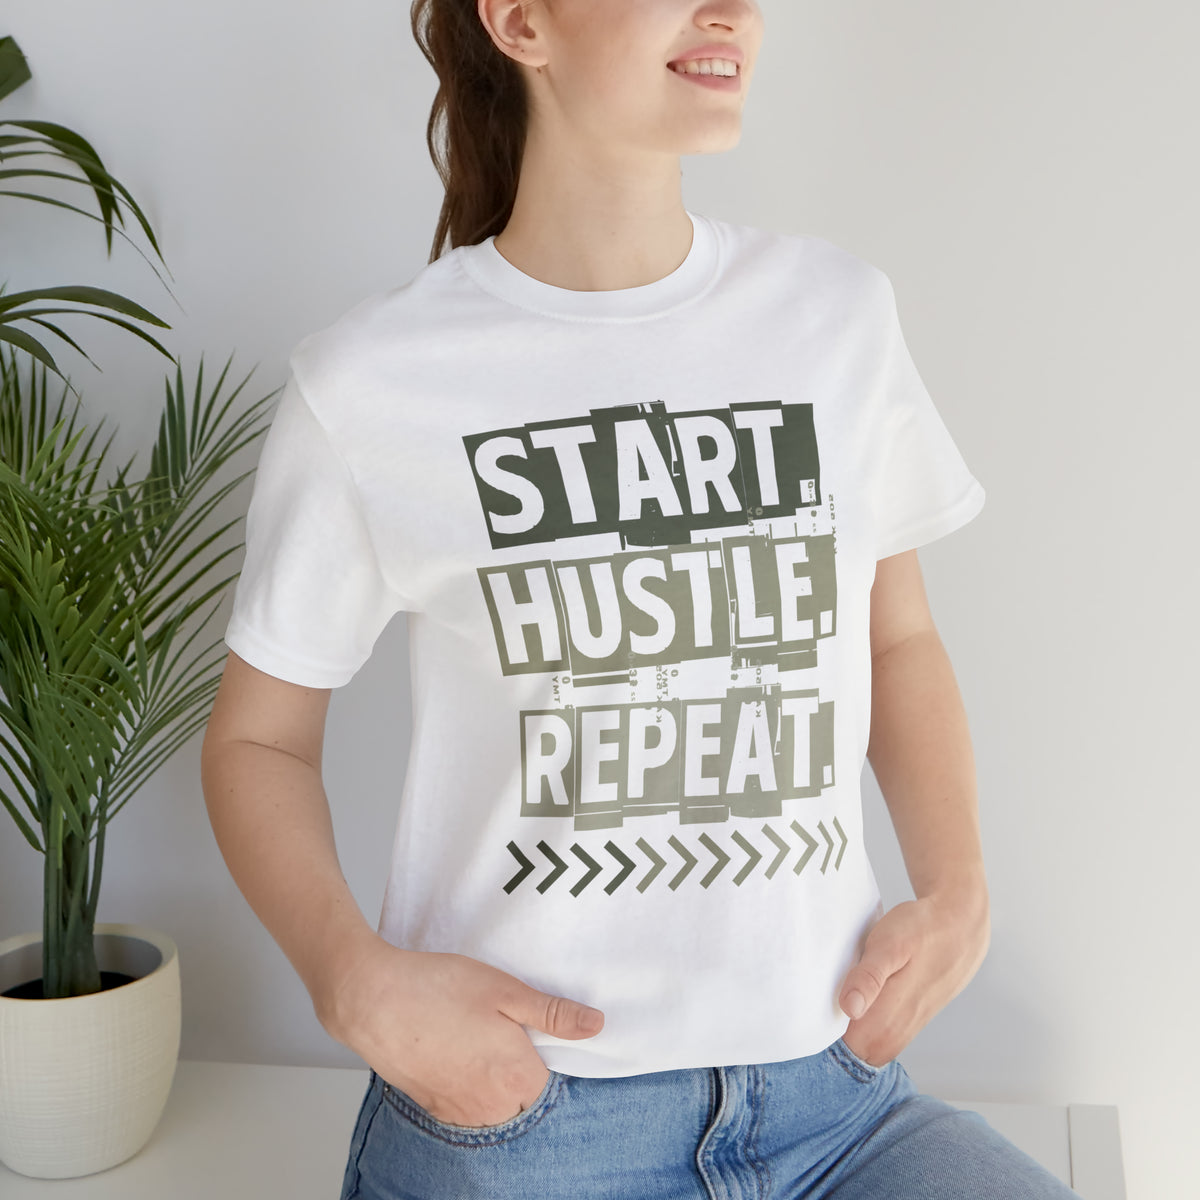 Start Hustle Repeat Mens Tee